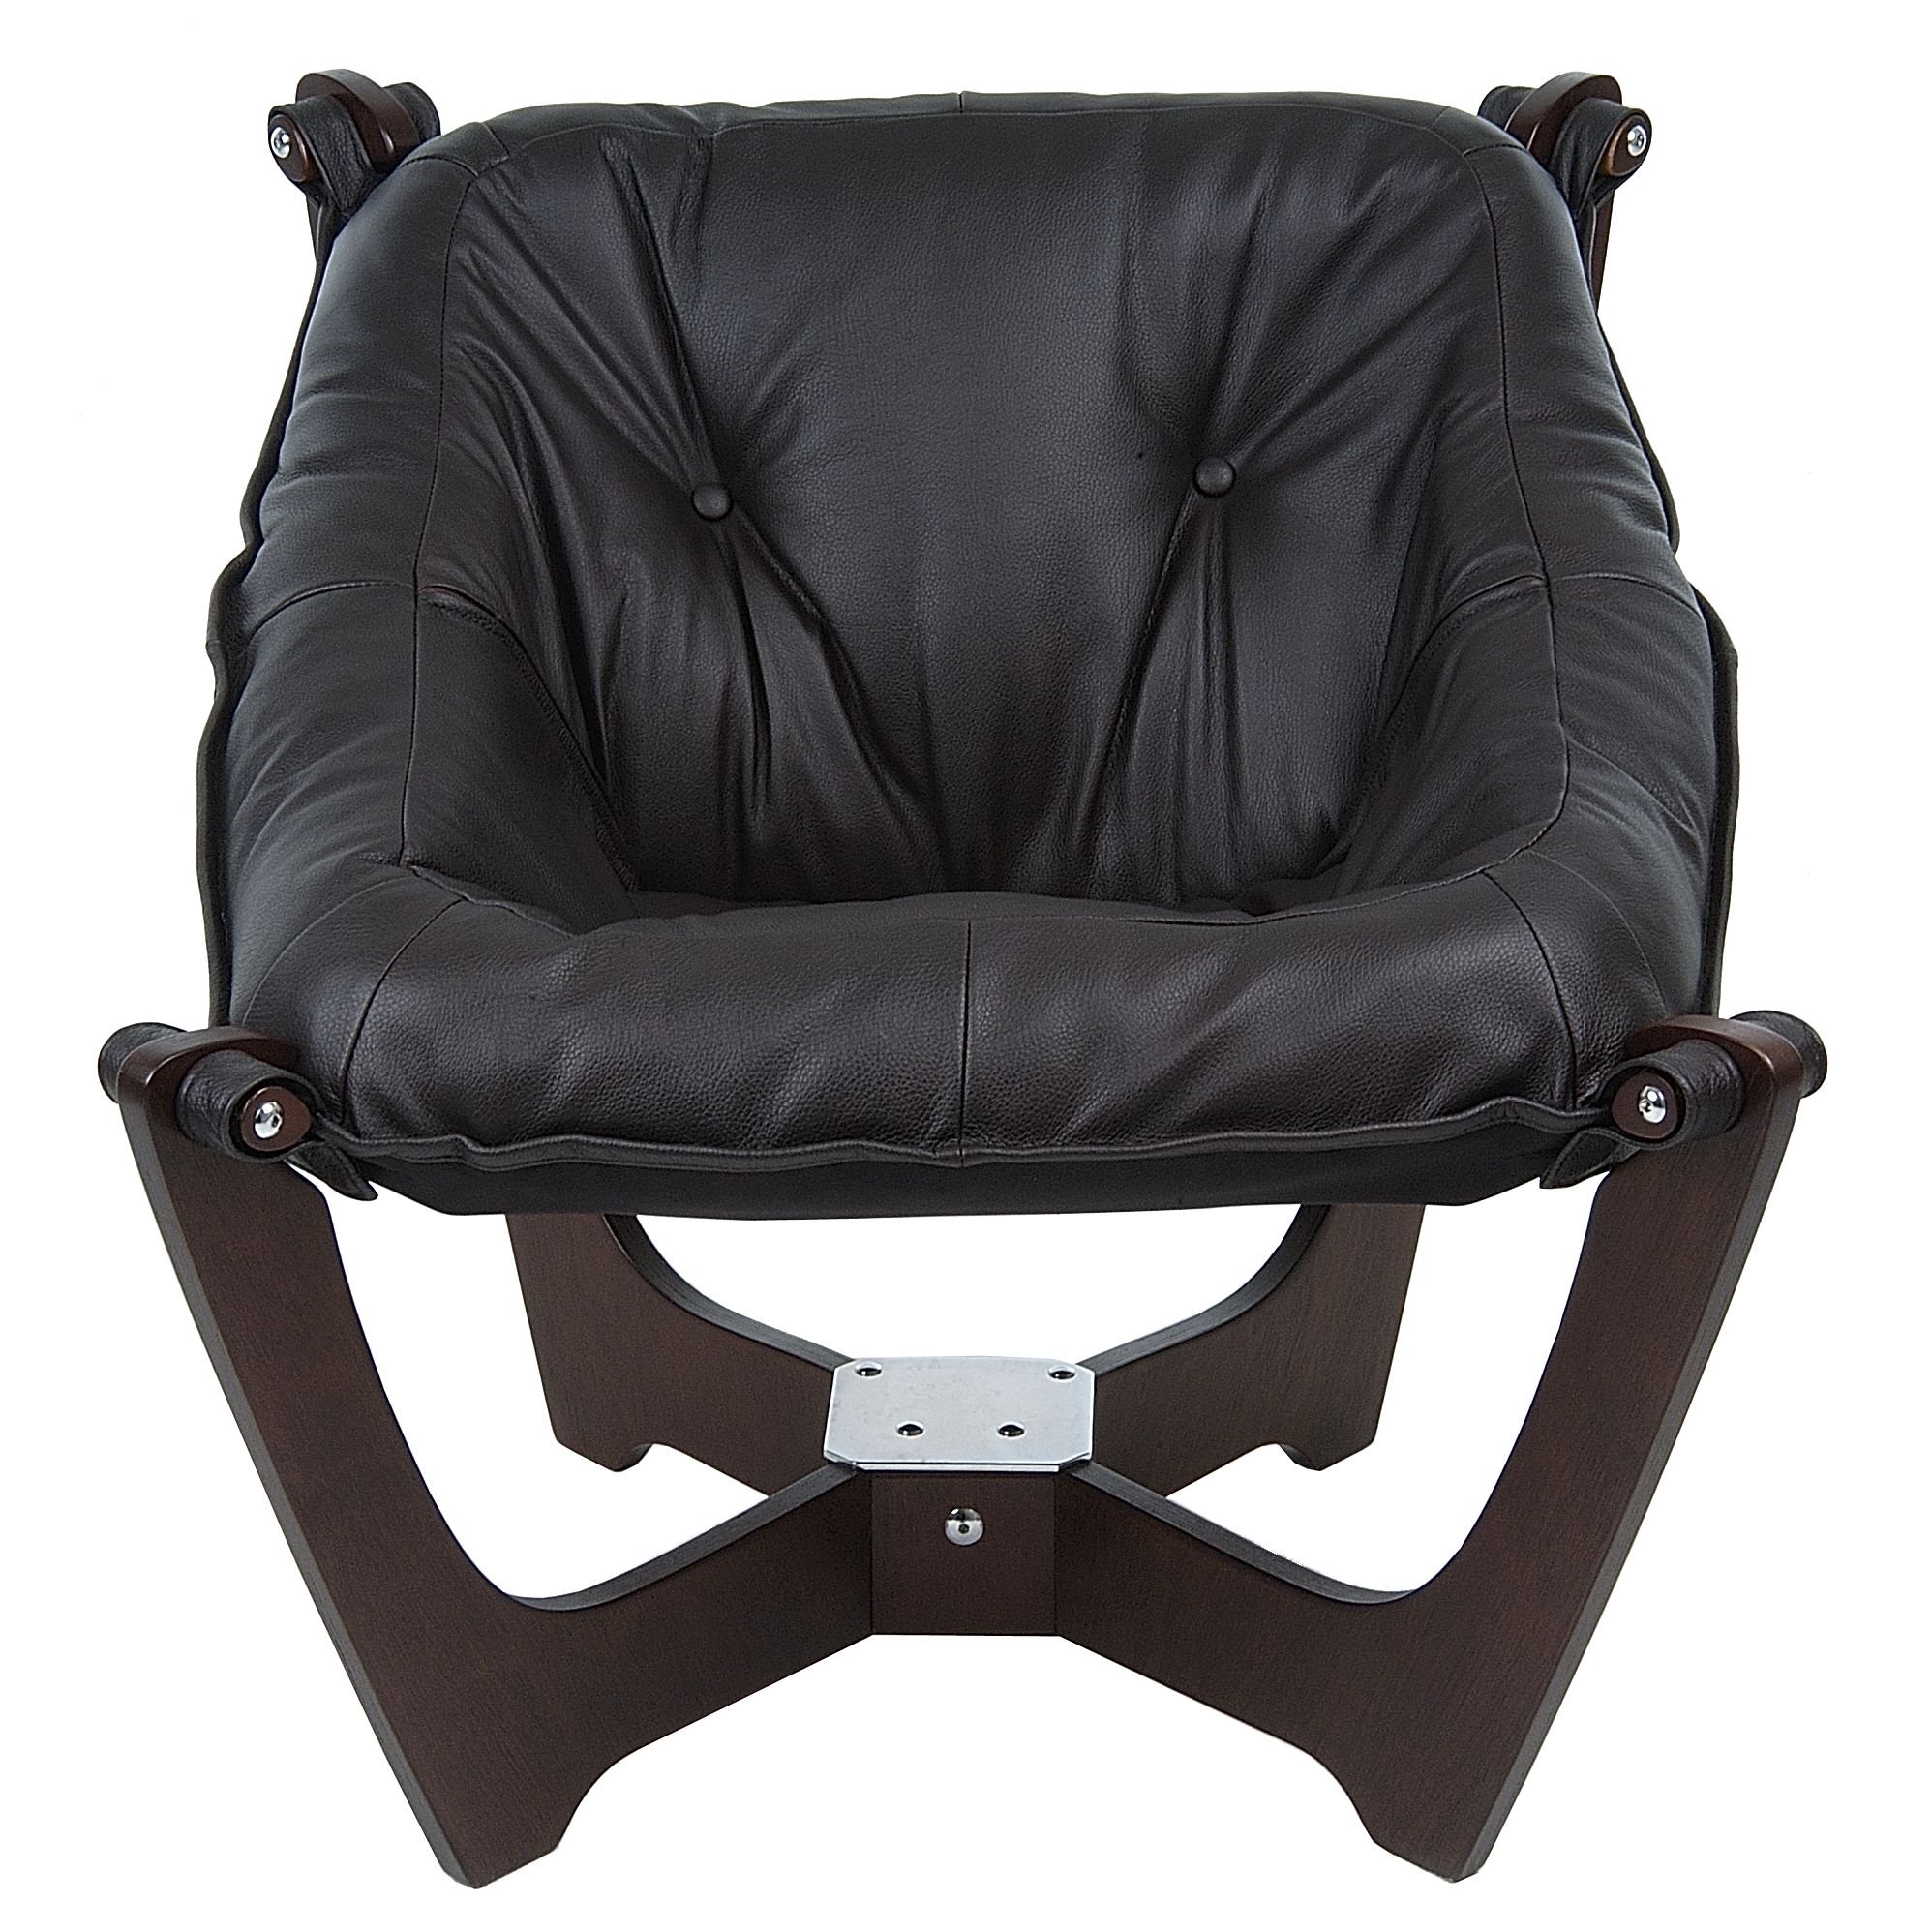 Zest Leather Chair, Havana Brown